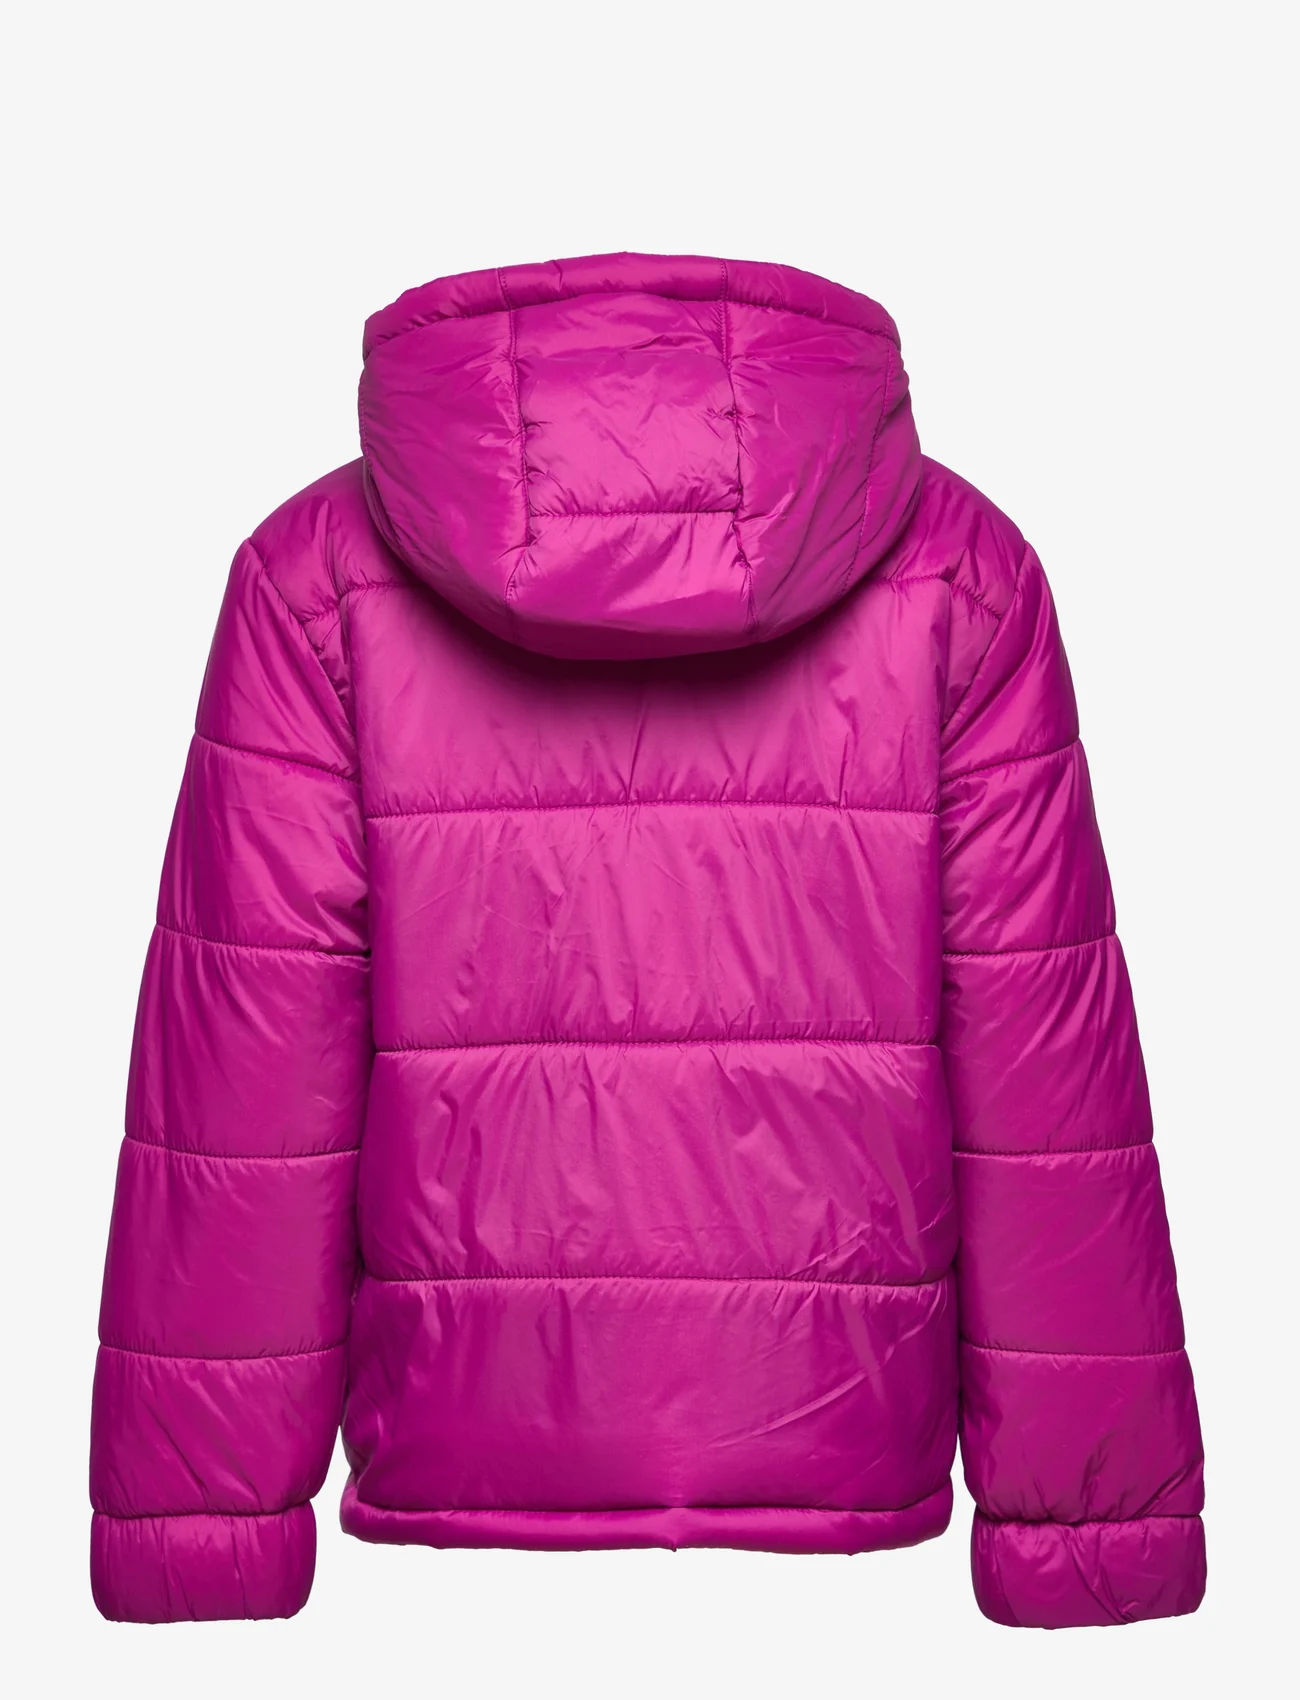 FILA - BREMEN padded jacket - isolerte jakker - wild aster - 1